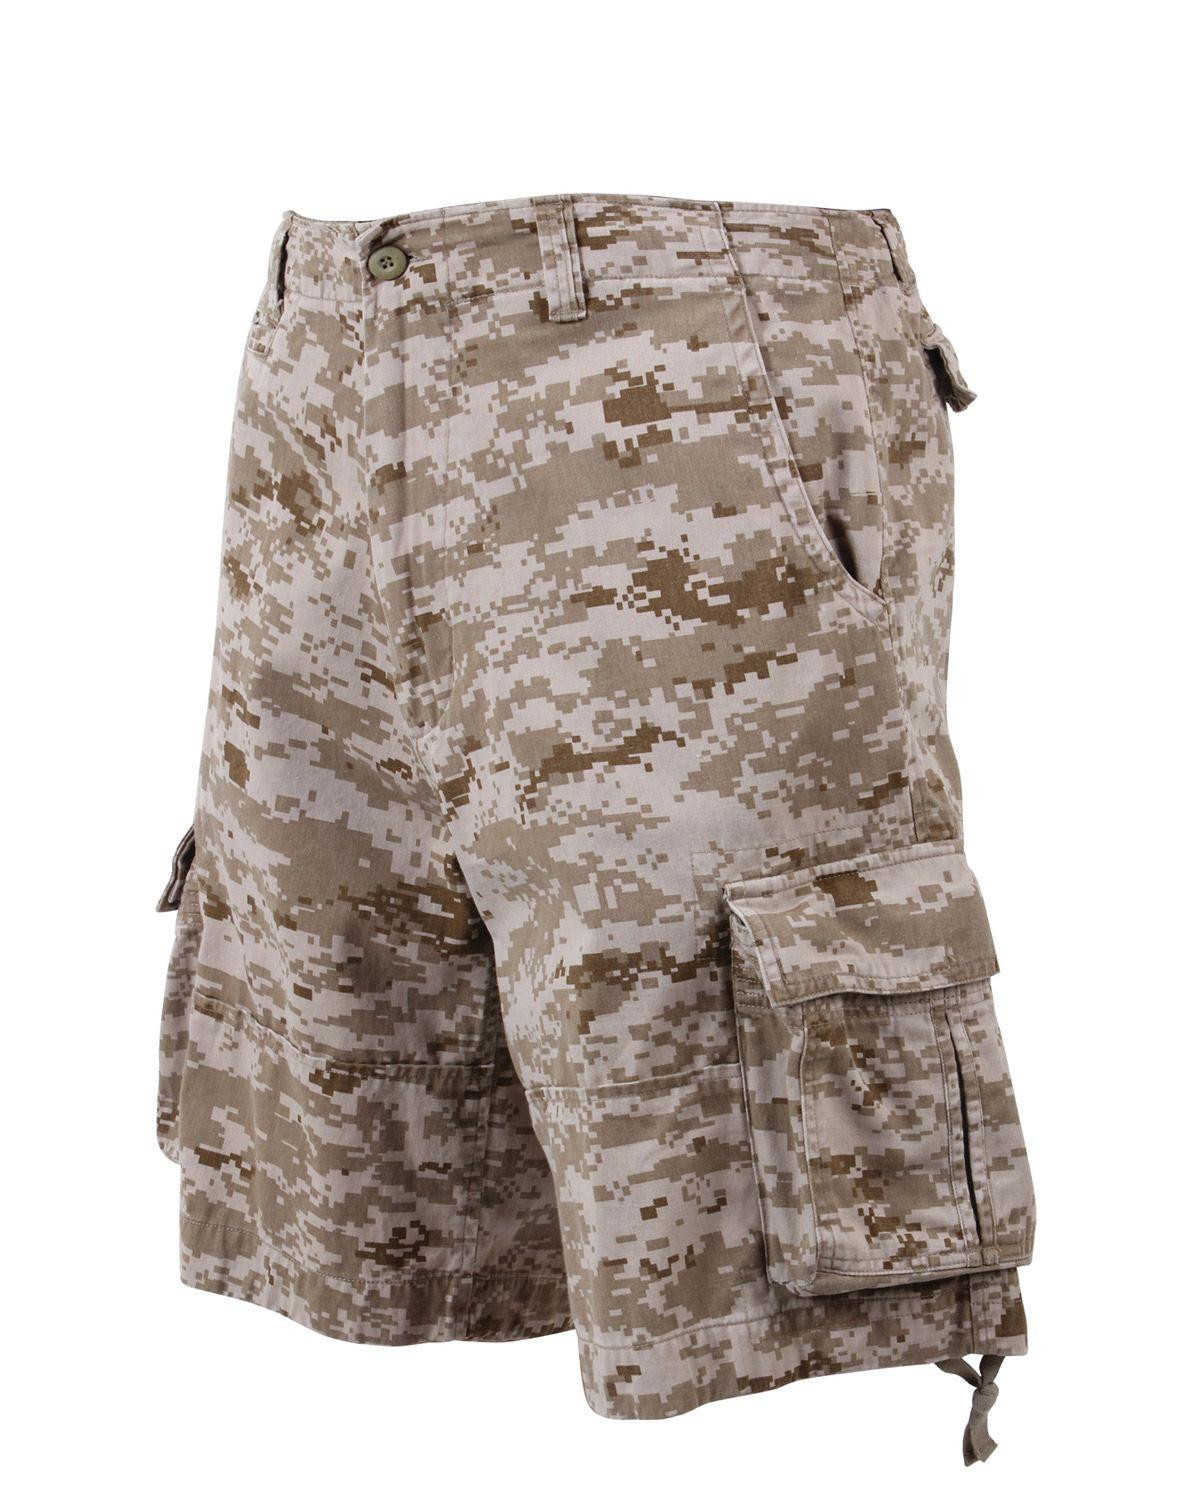 Rothco Vintage Infantry Shorts (Desert Digital Camo, 2XL)